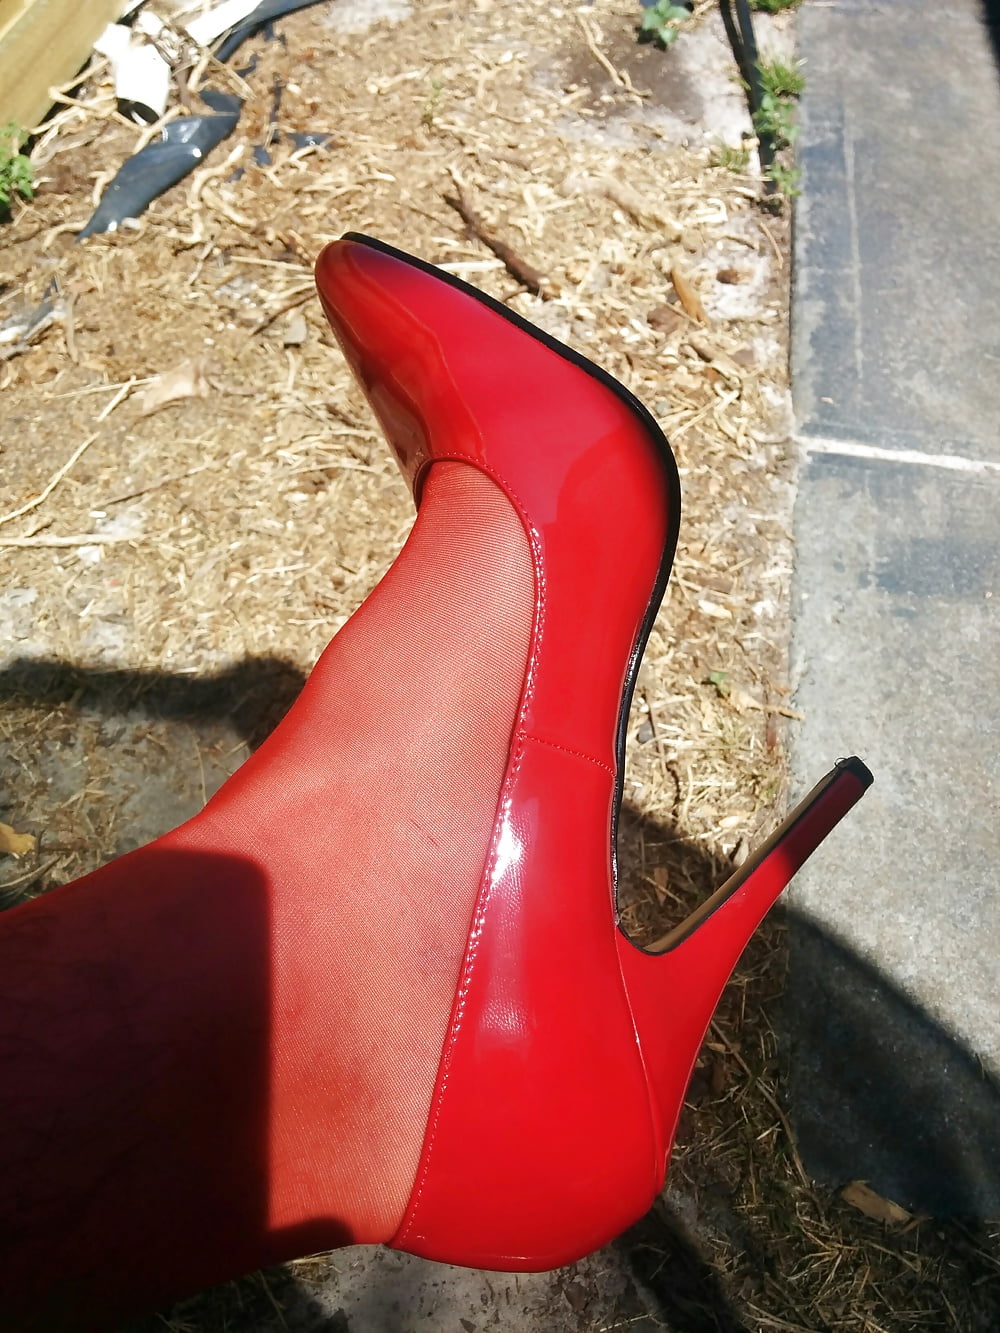 New heels: Red &; Pump Shoe. Like?